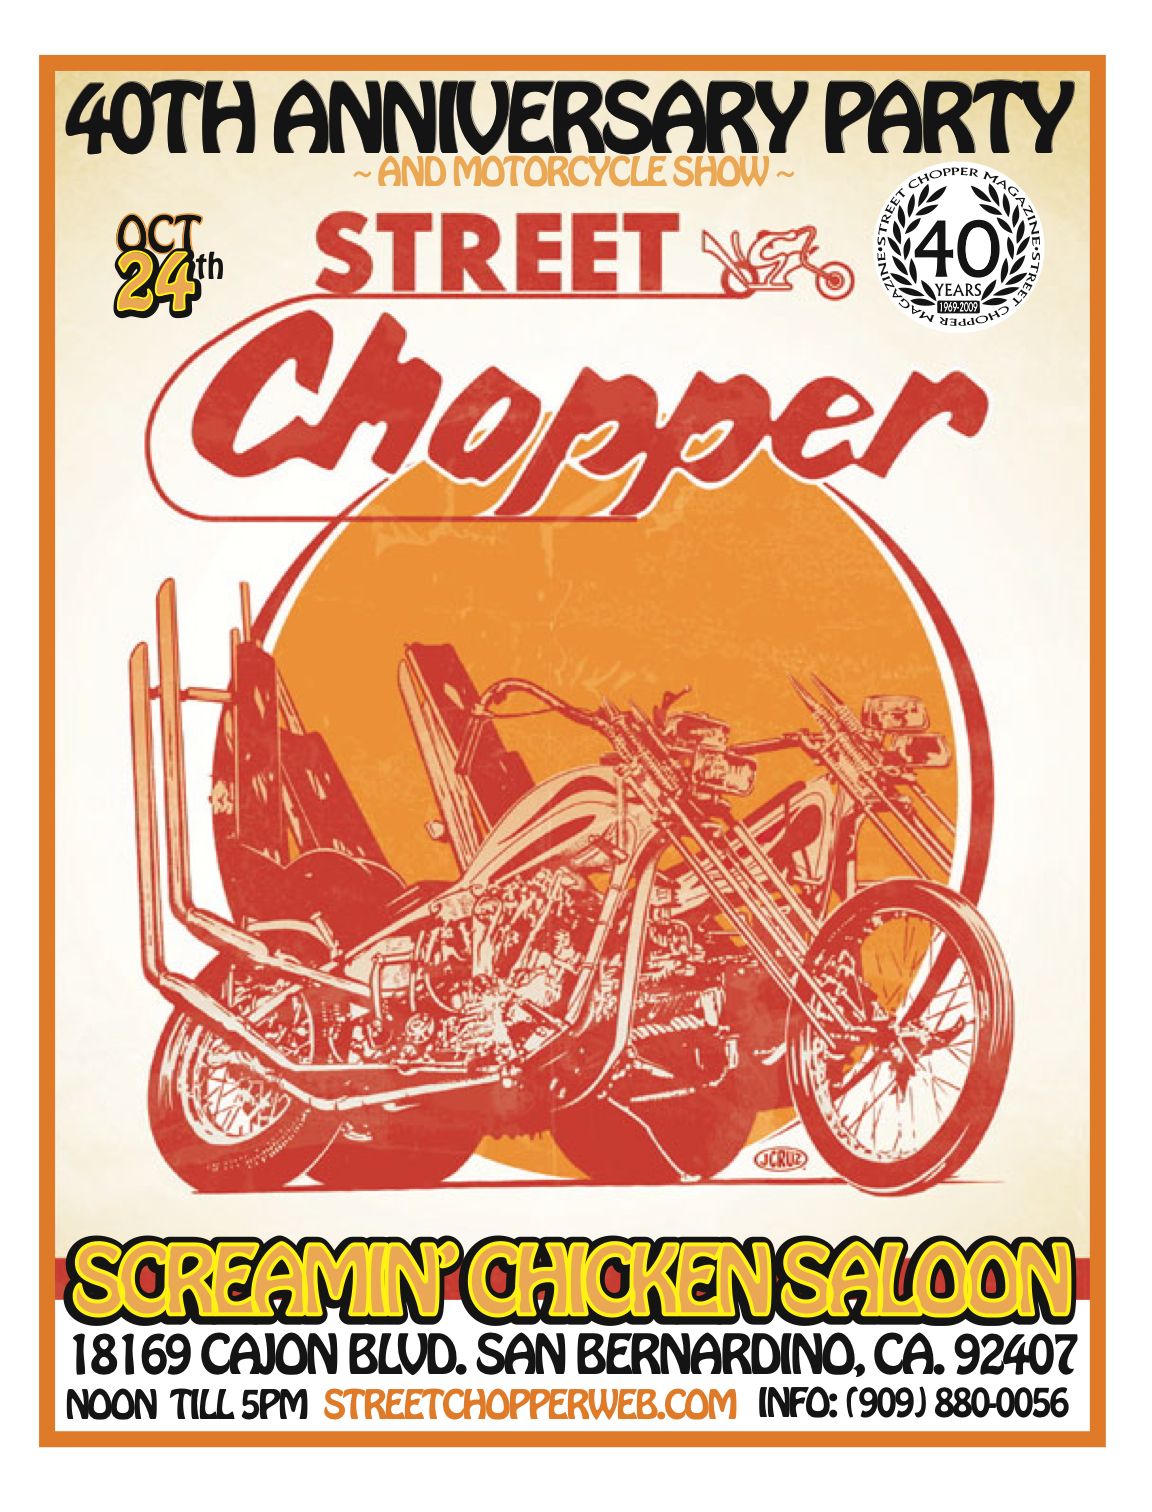 Street Chopper 40th Party!